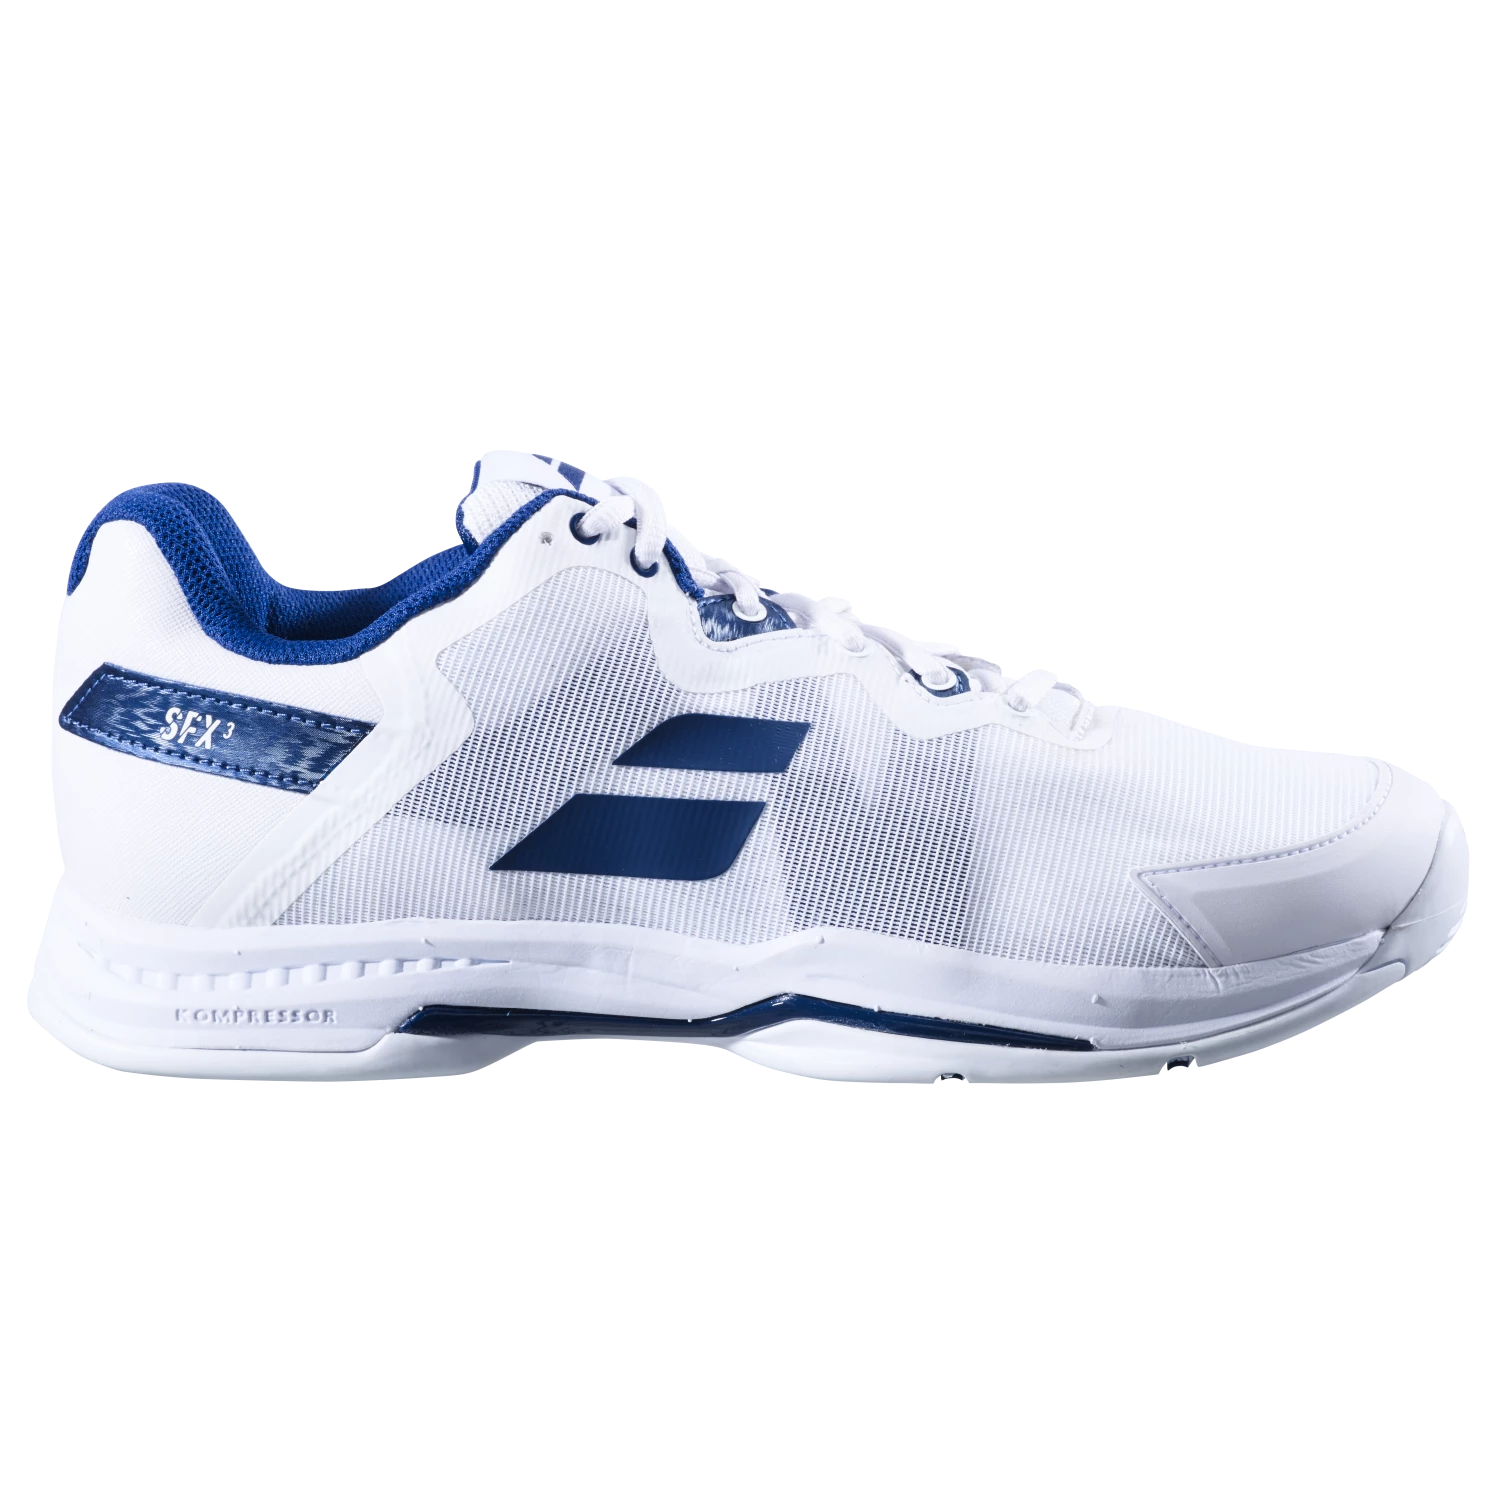 Babolat SFX 3 Men's All Court Tennis Shoes Men White/Navy EUR 42.5